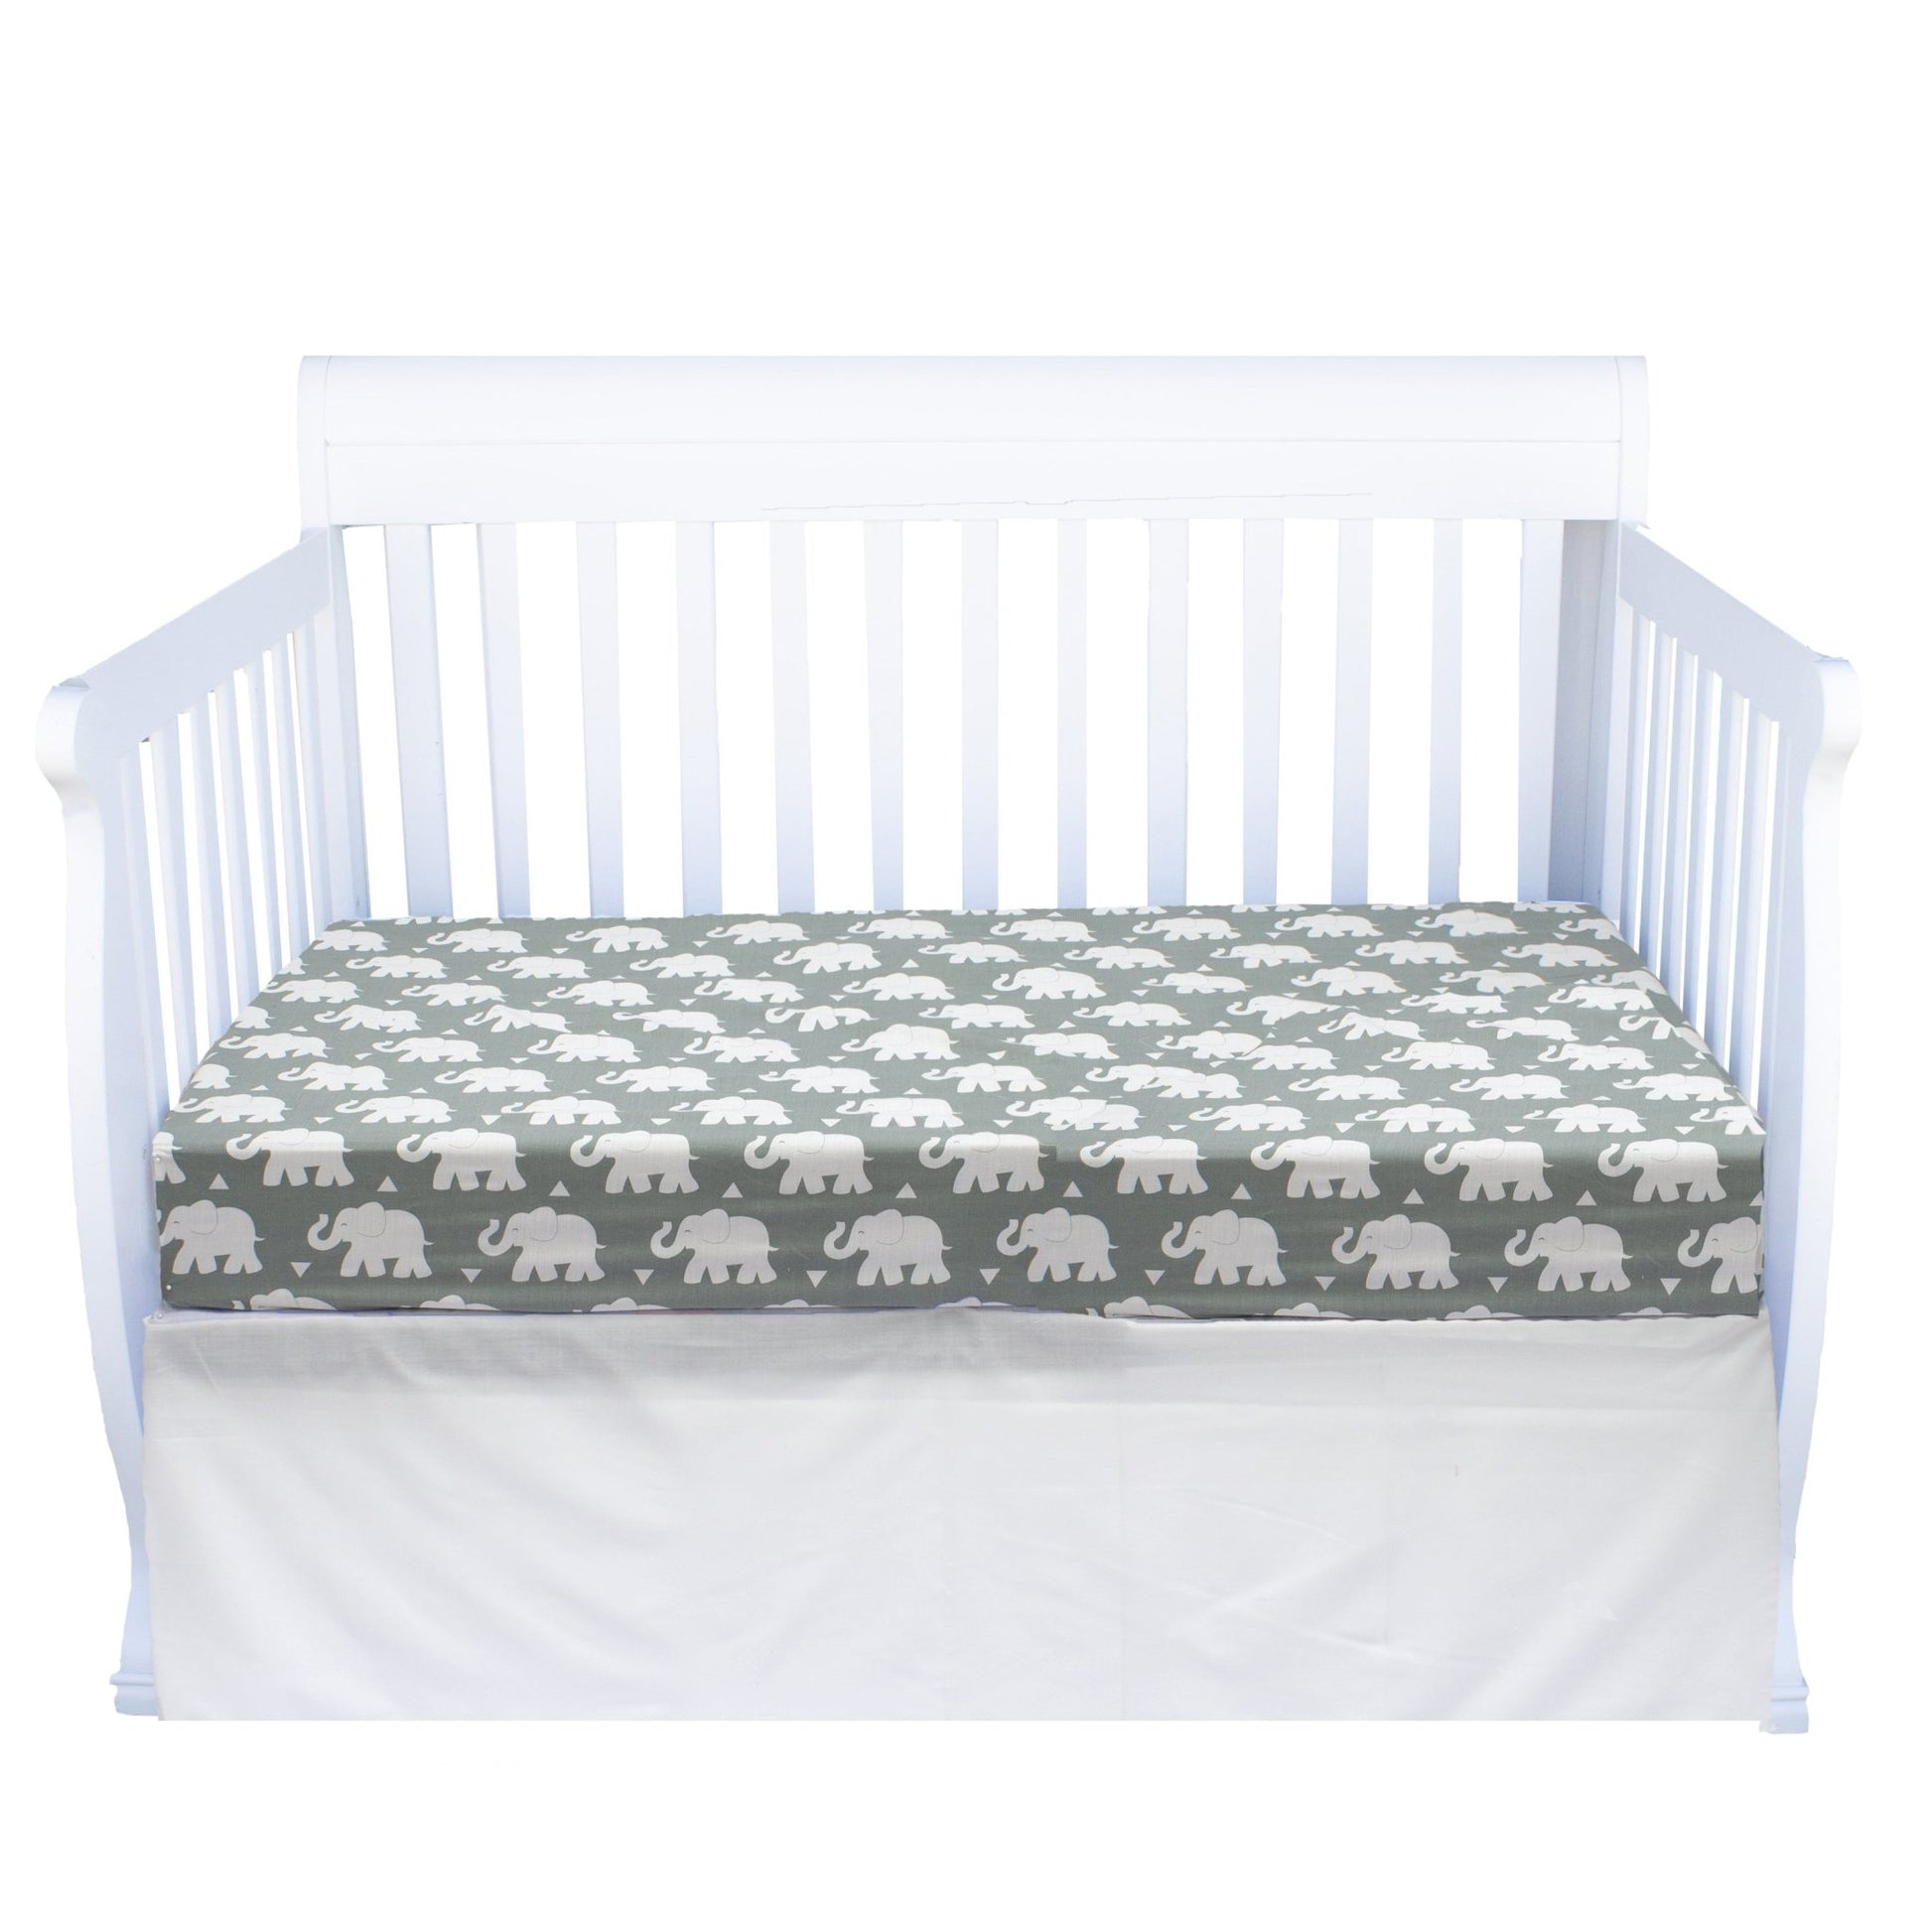 Indie Elephant 6 Piece Crib Bedding Set - New Arrivals Inc